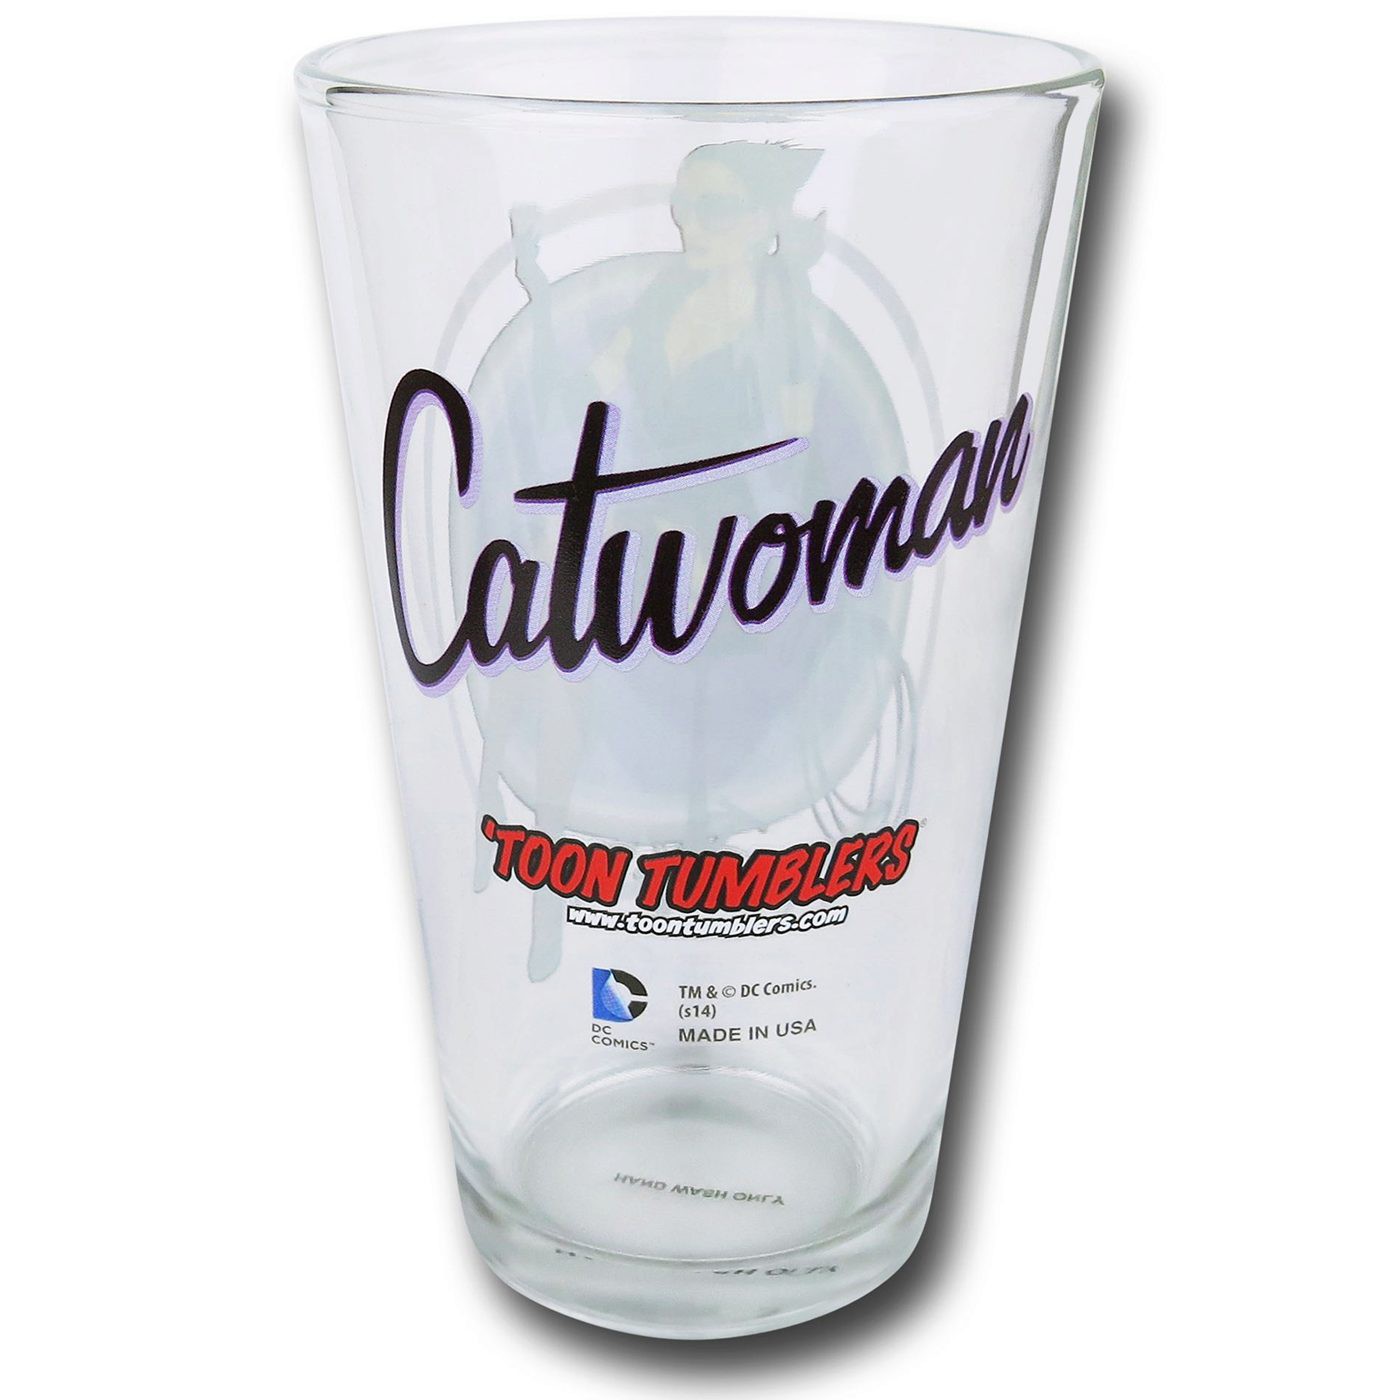 Catwoman Bombshells Pint Glass